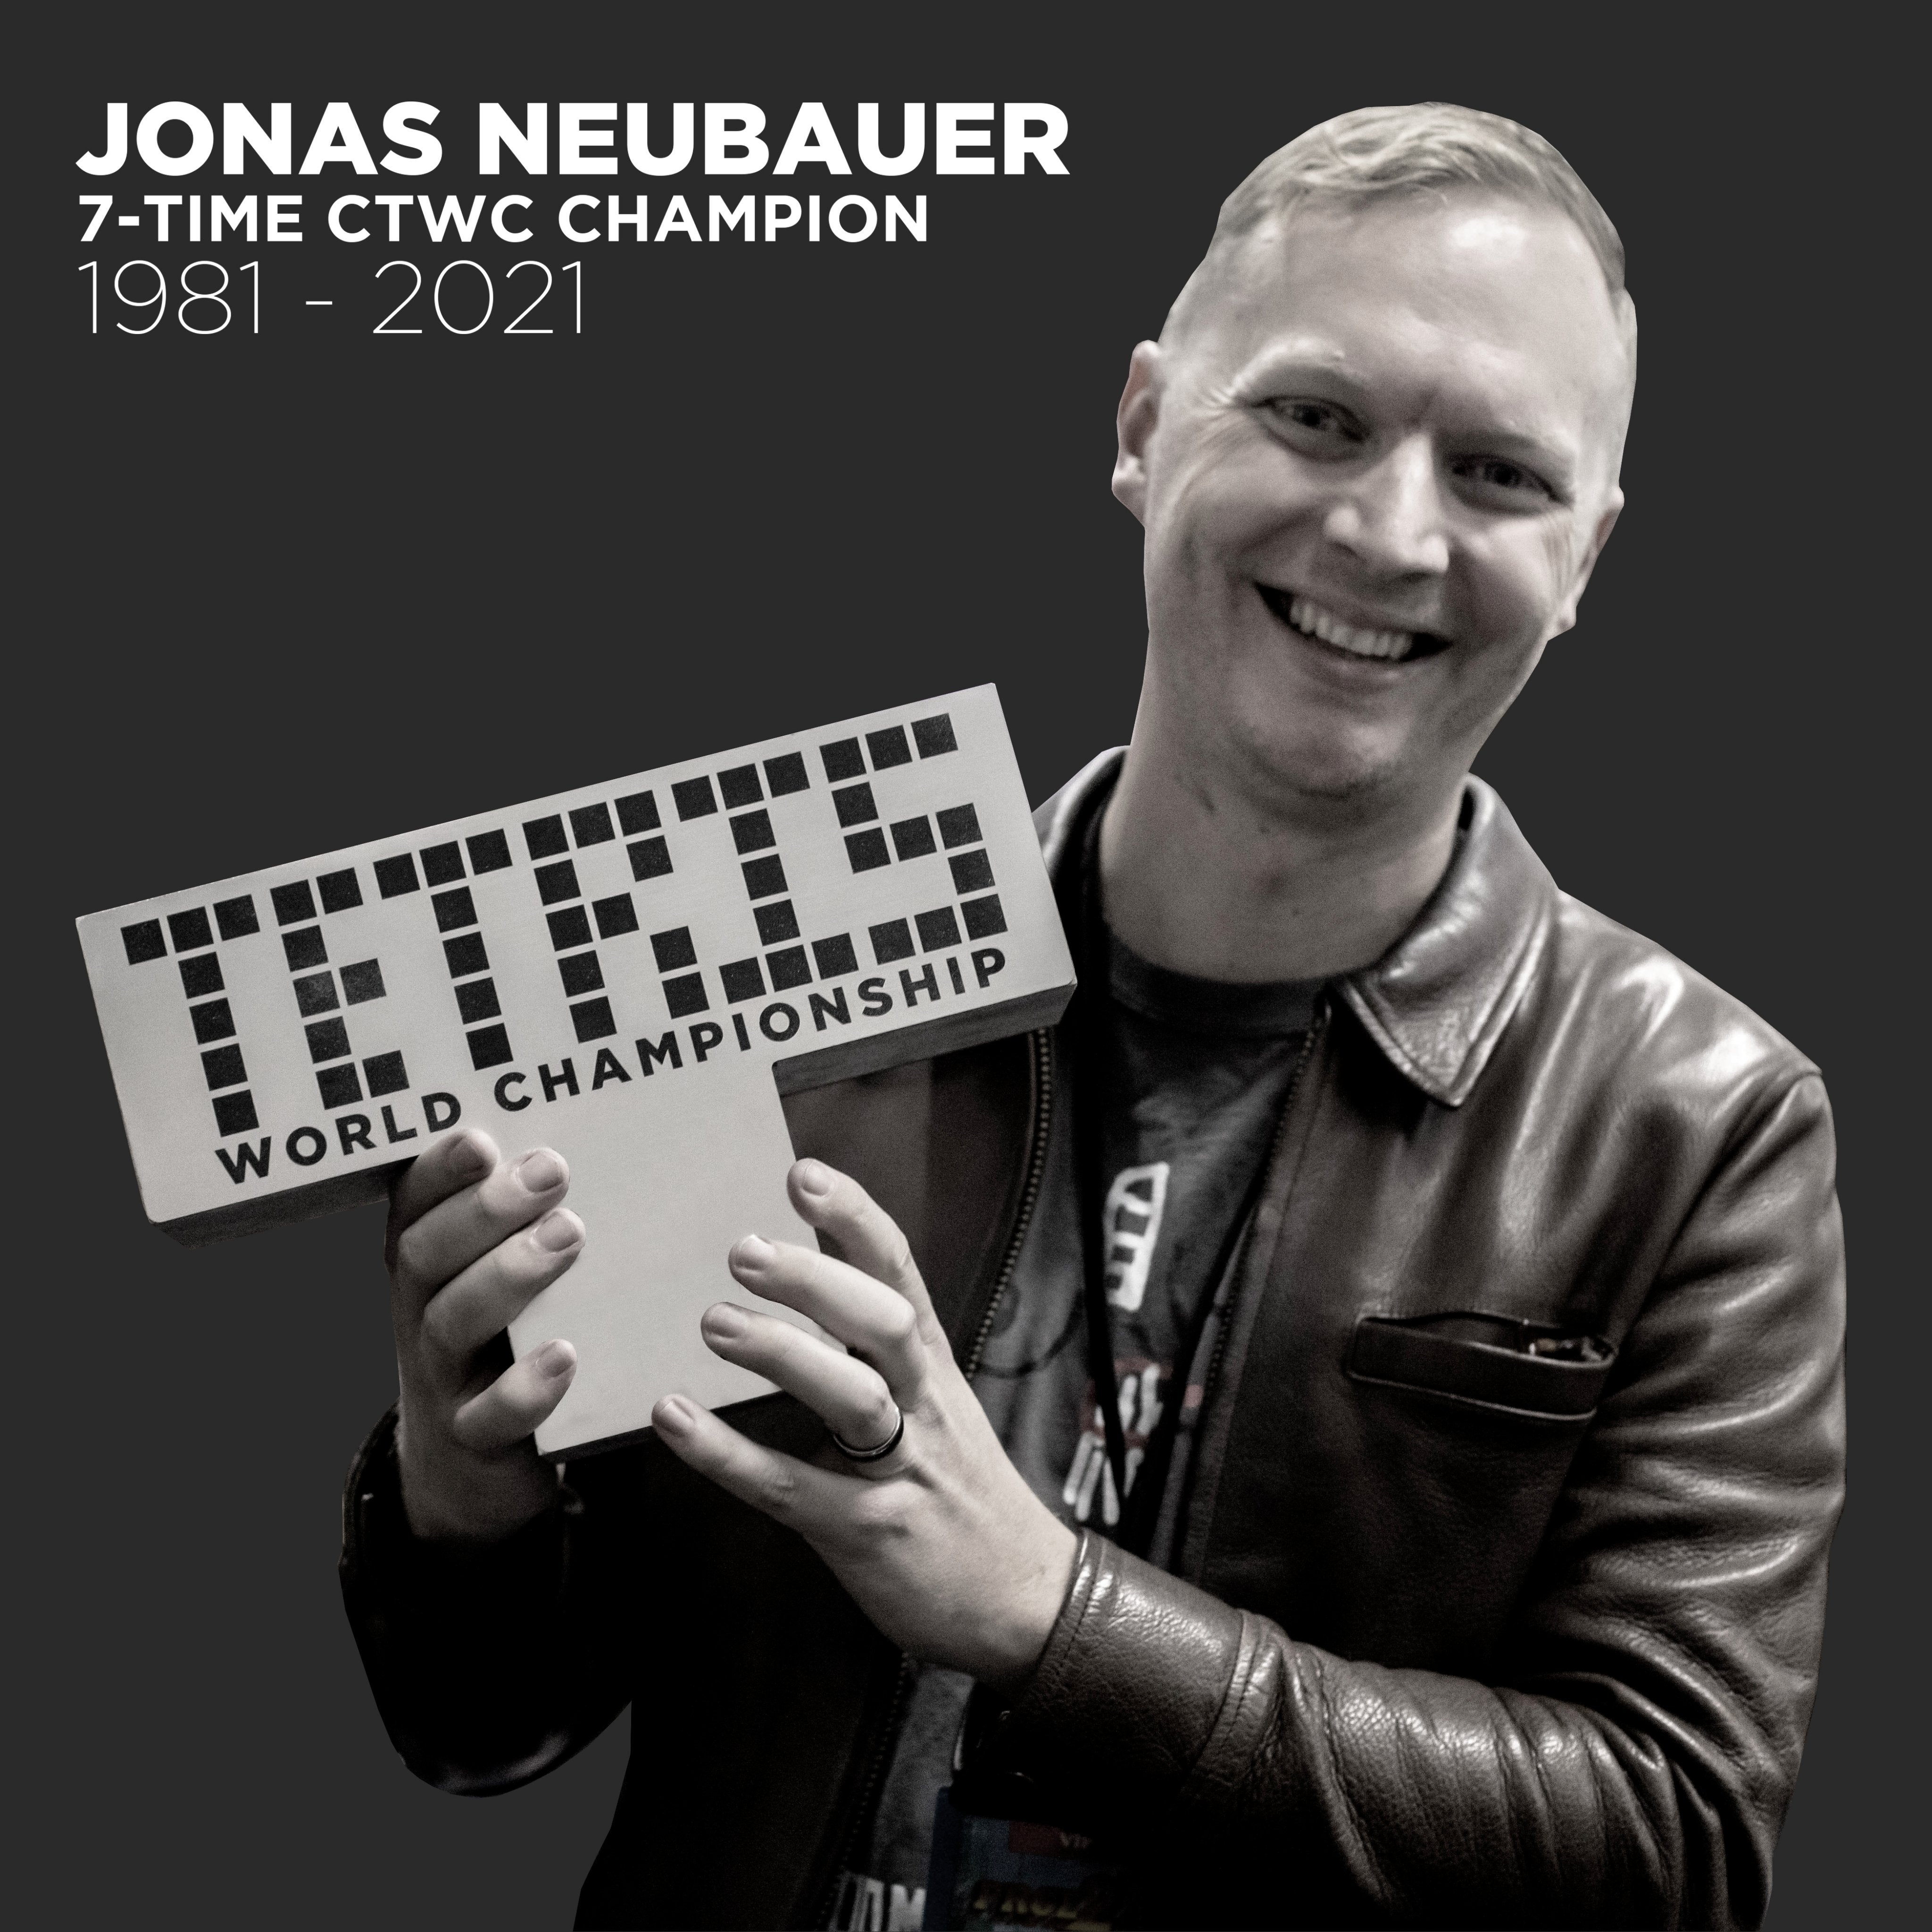 Image for Legendary Tetris player, Jonas Neubauer, has passed away suddenly aged 39